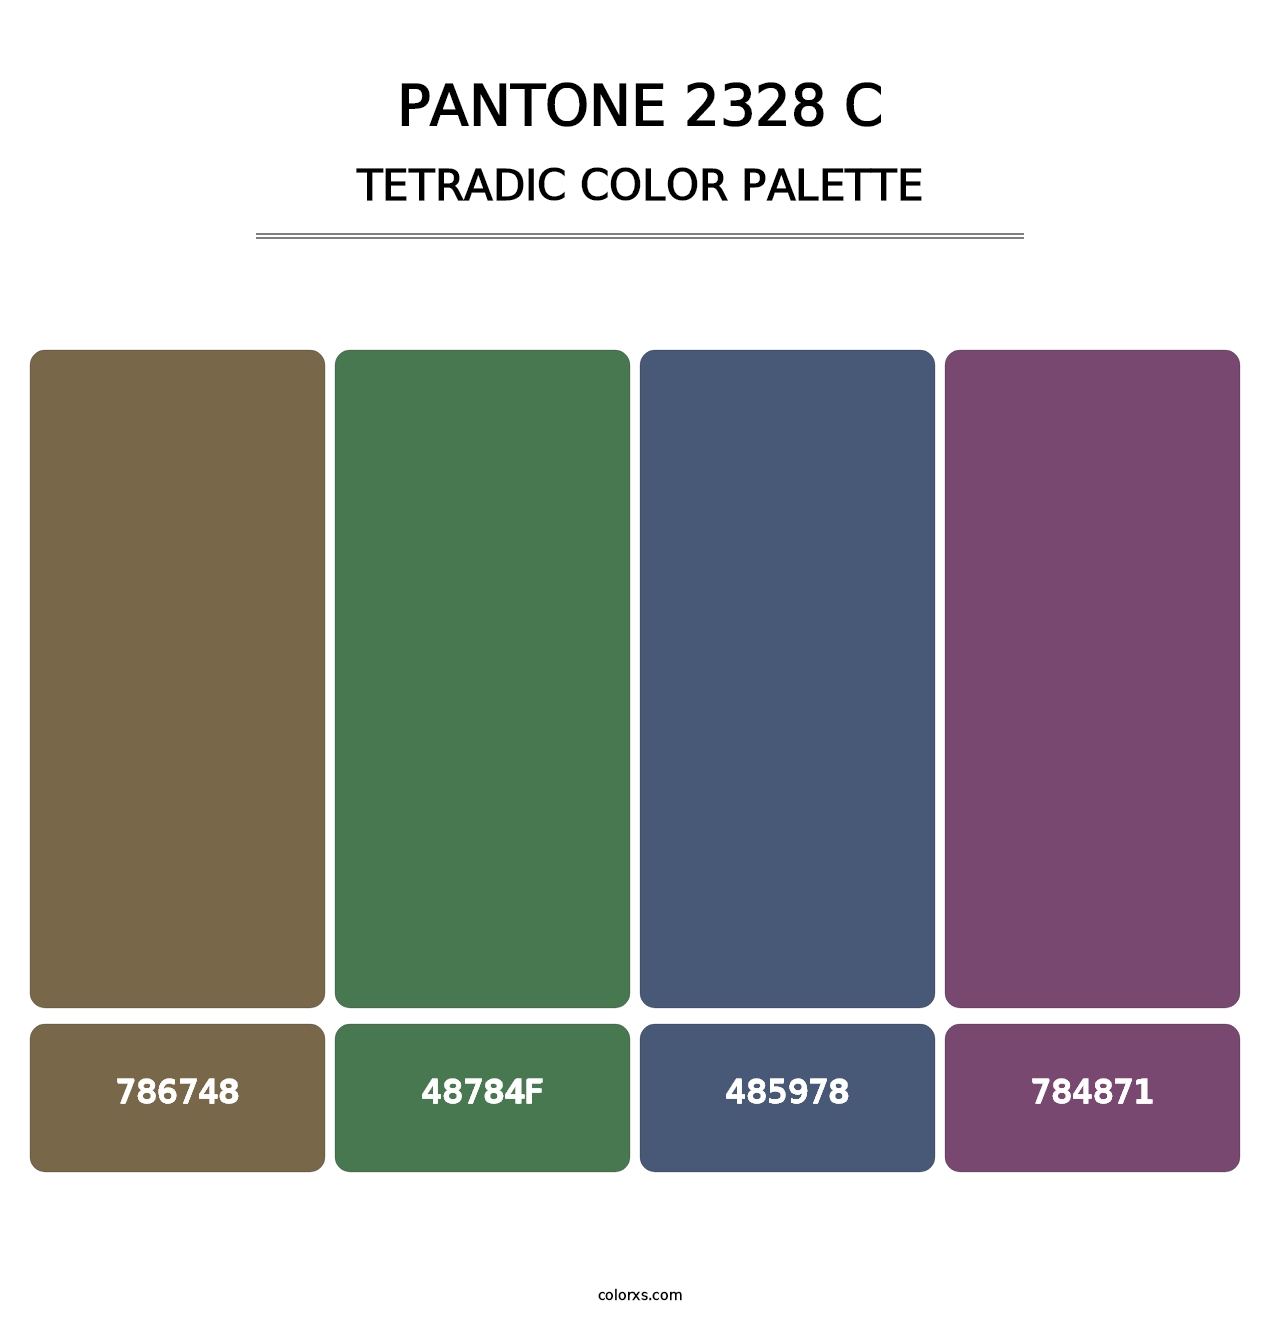 PANTONE 2328 C - Tetradic Color Palette